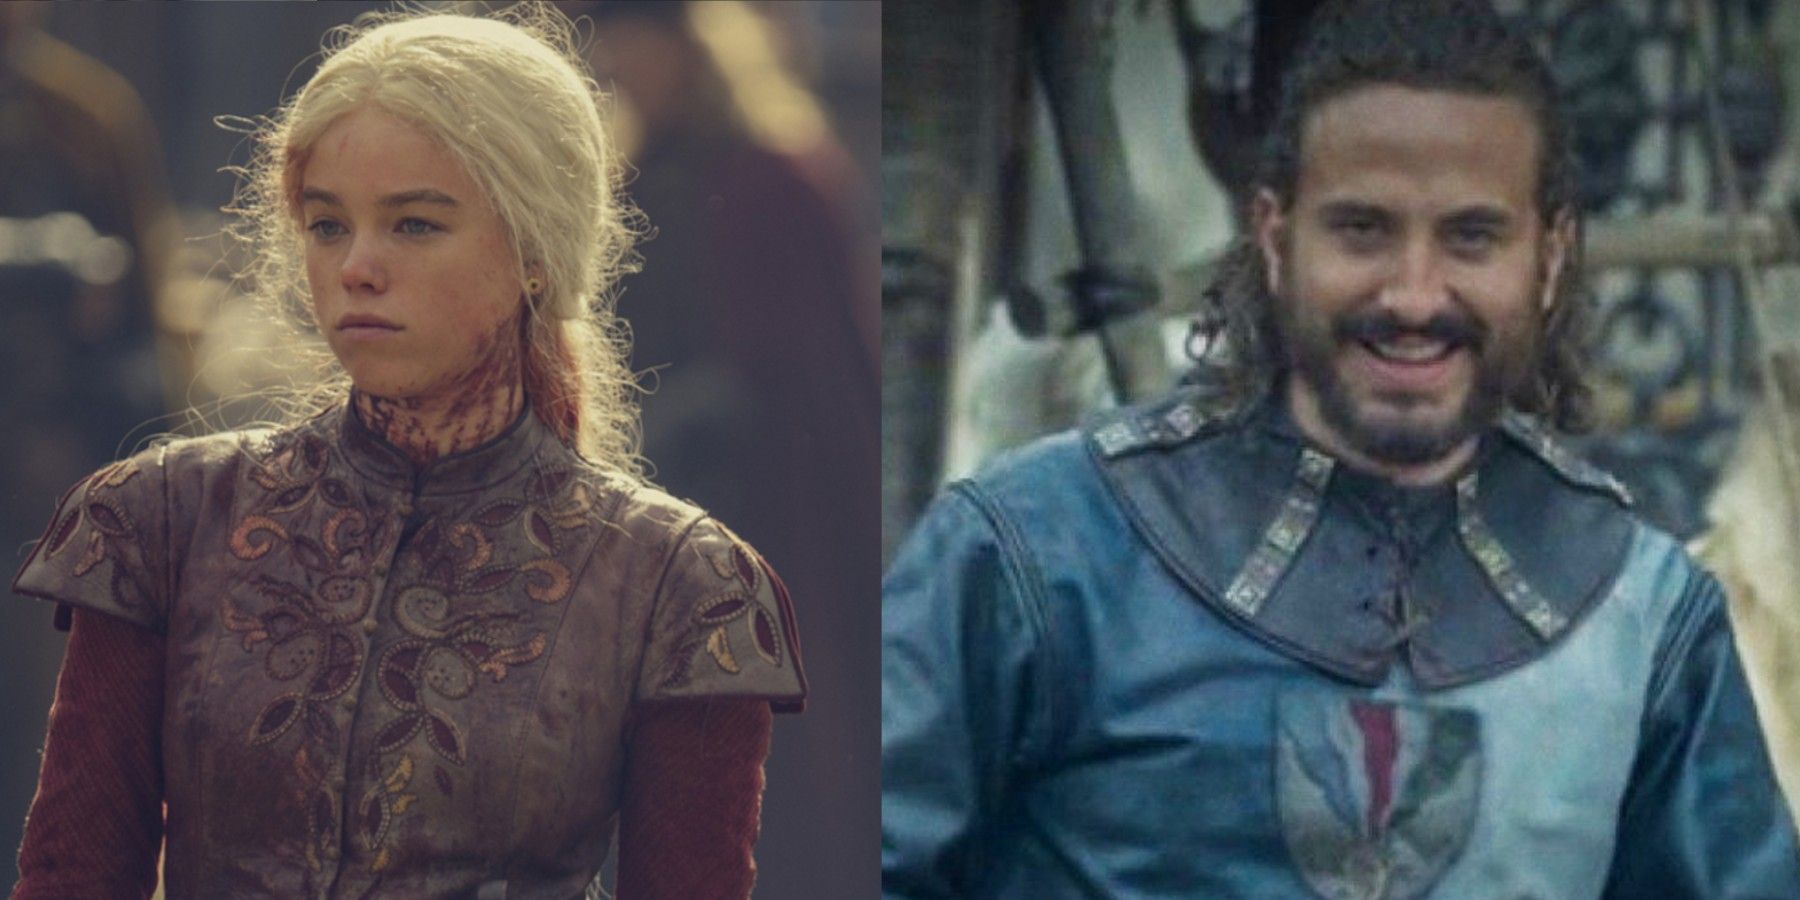 Rhaenyra Targaryen (Milly Alcock) and Ser Harwin Strong (Ryan Corr) in House of the Dragon